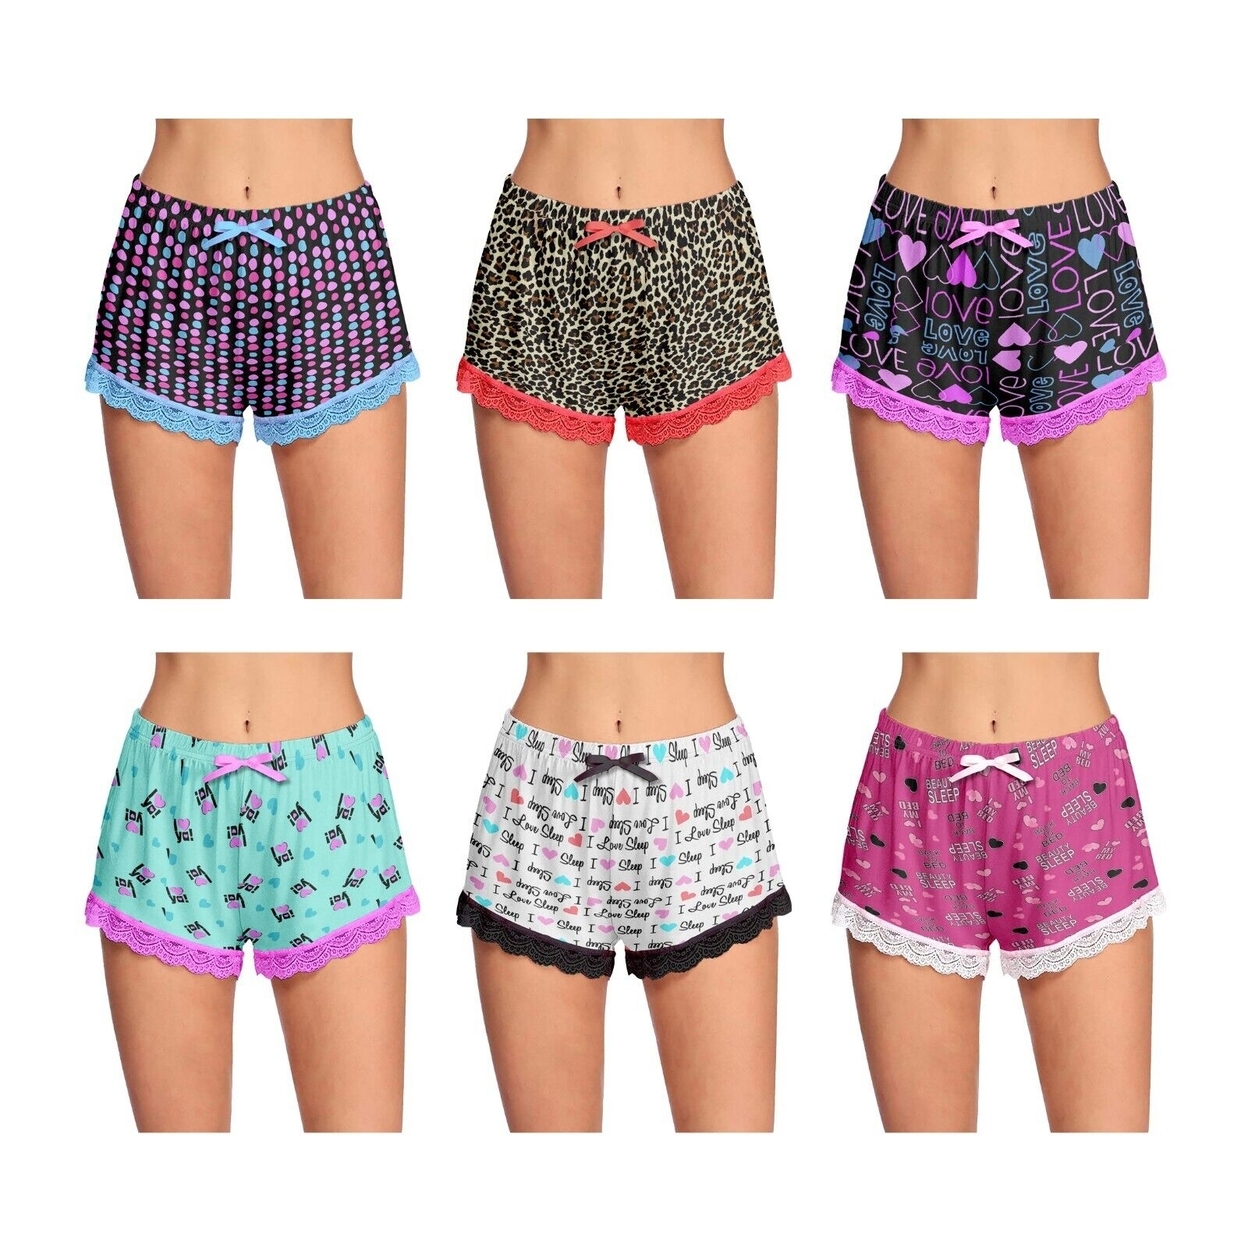 6-Pack: Women's Ultra-Soft Cozy Fun Printed Lace Trim Pajama Lounge Shorts - Small, Animal